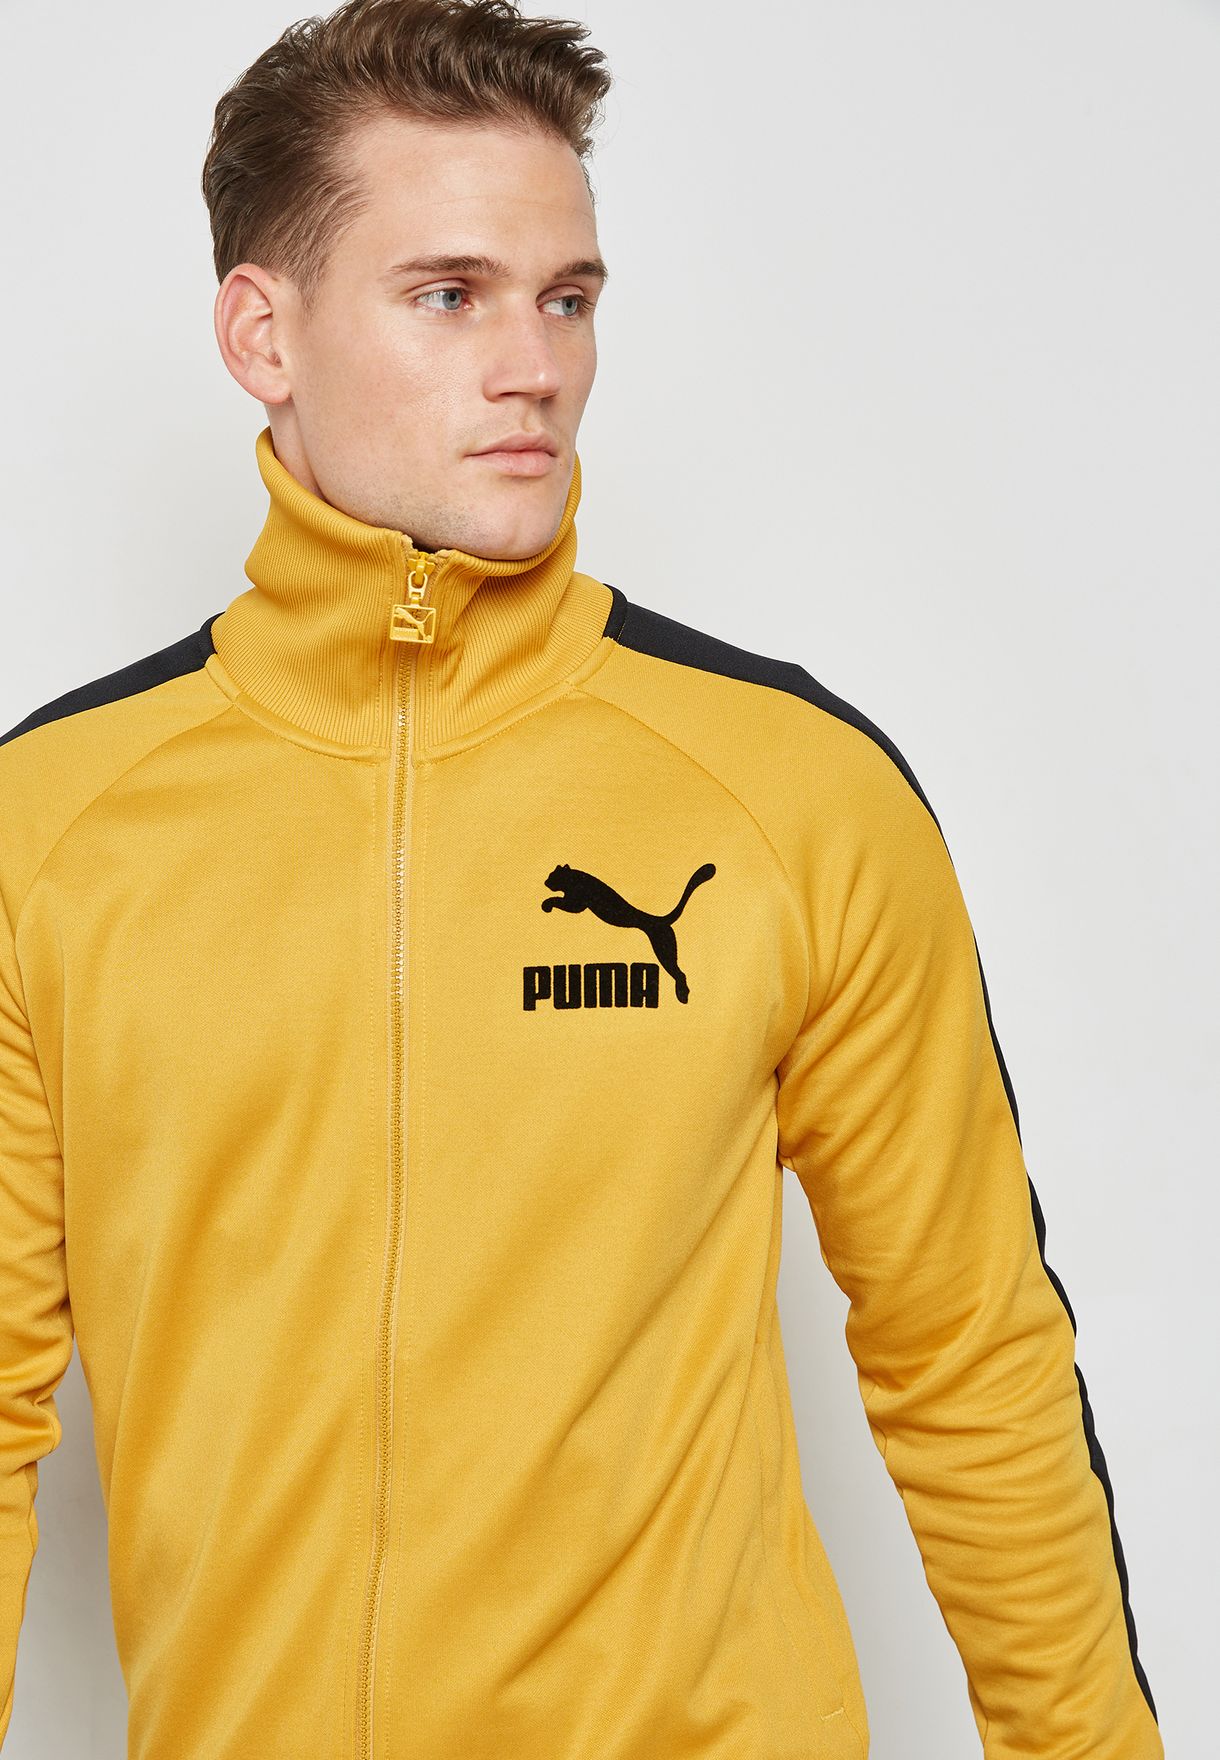 puma yellow jacket